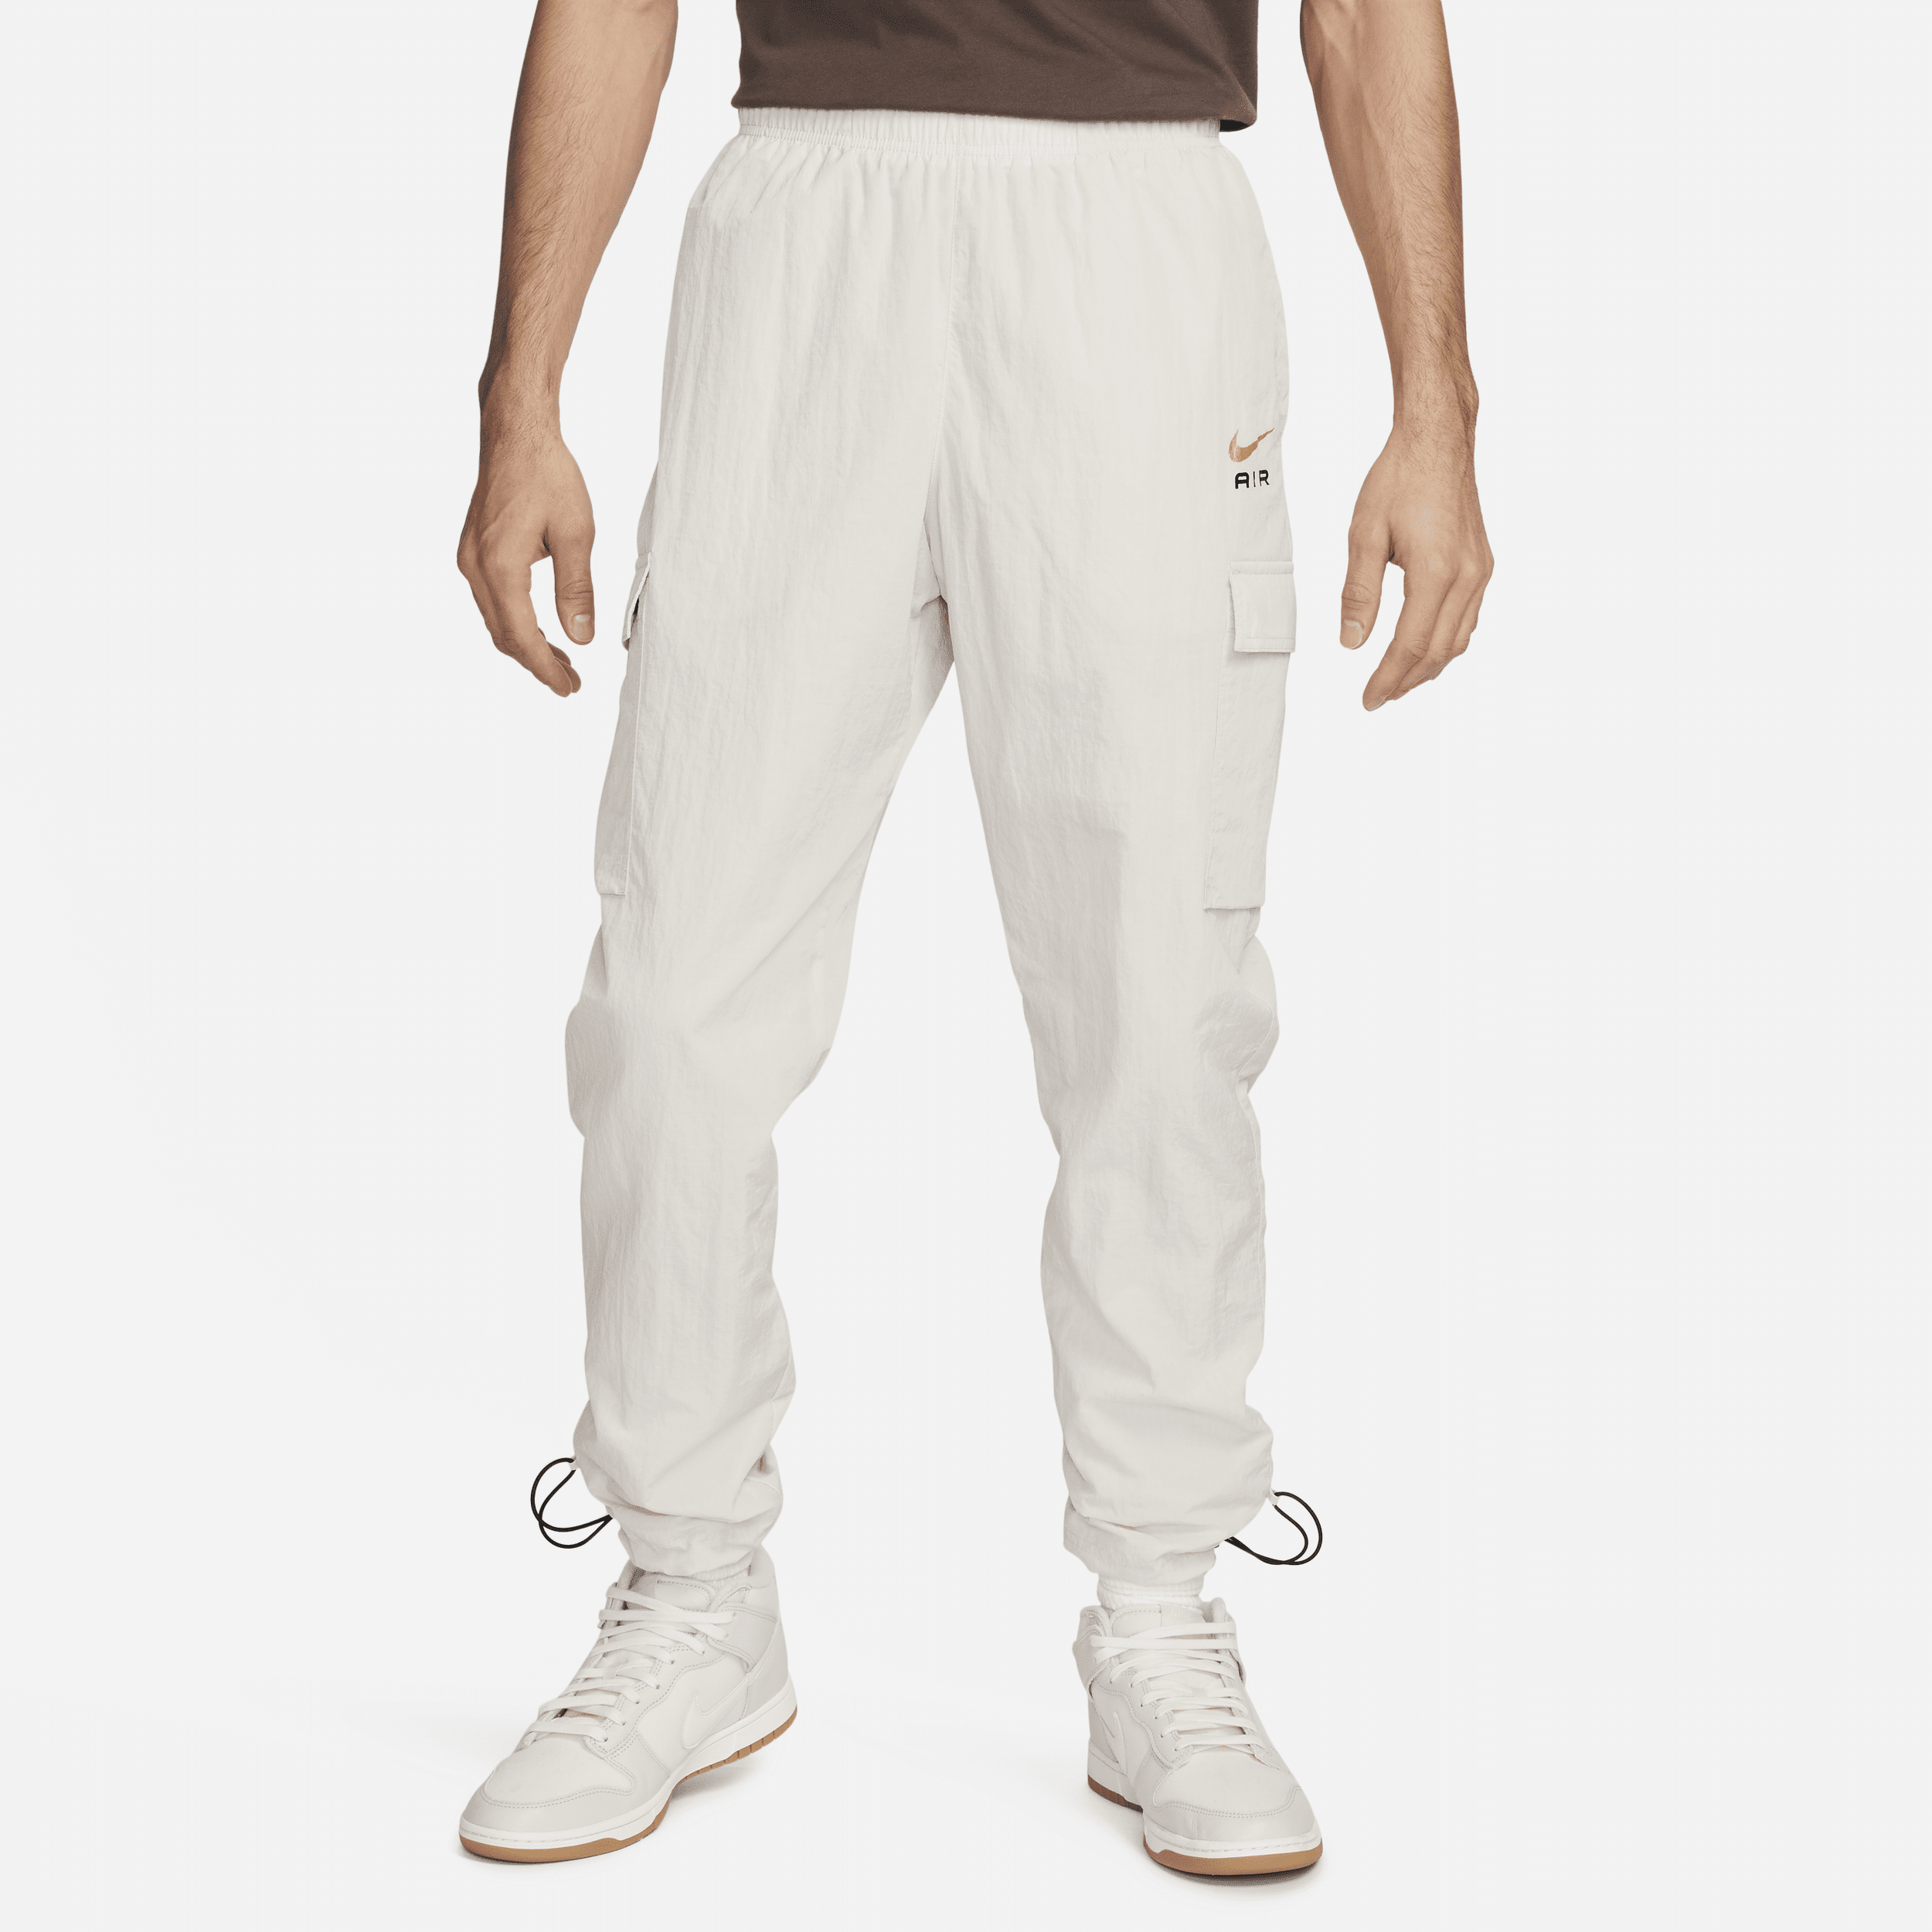 Pantaloni leggeri in tessuto Nike Air – Uomo - Marrone